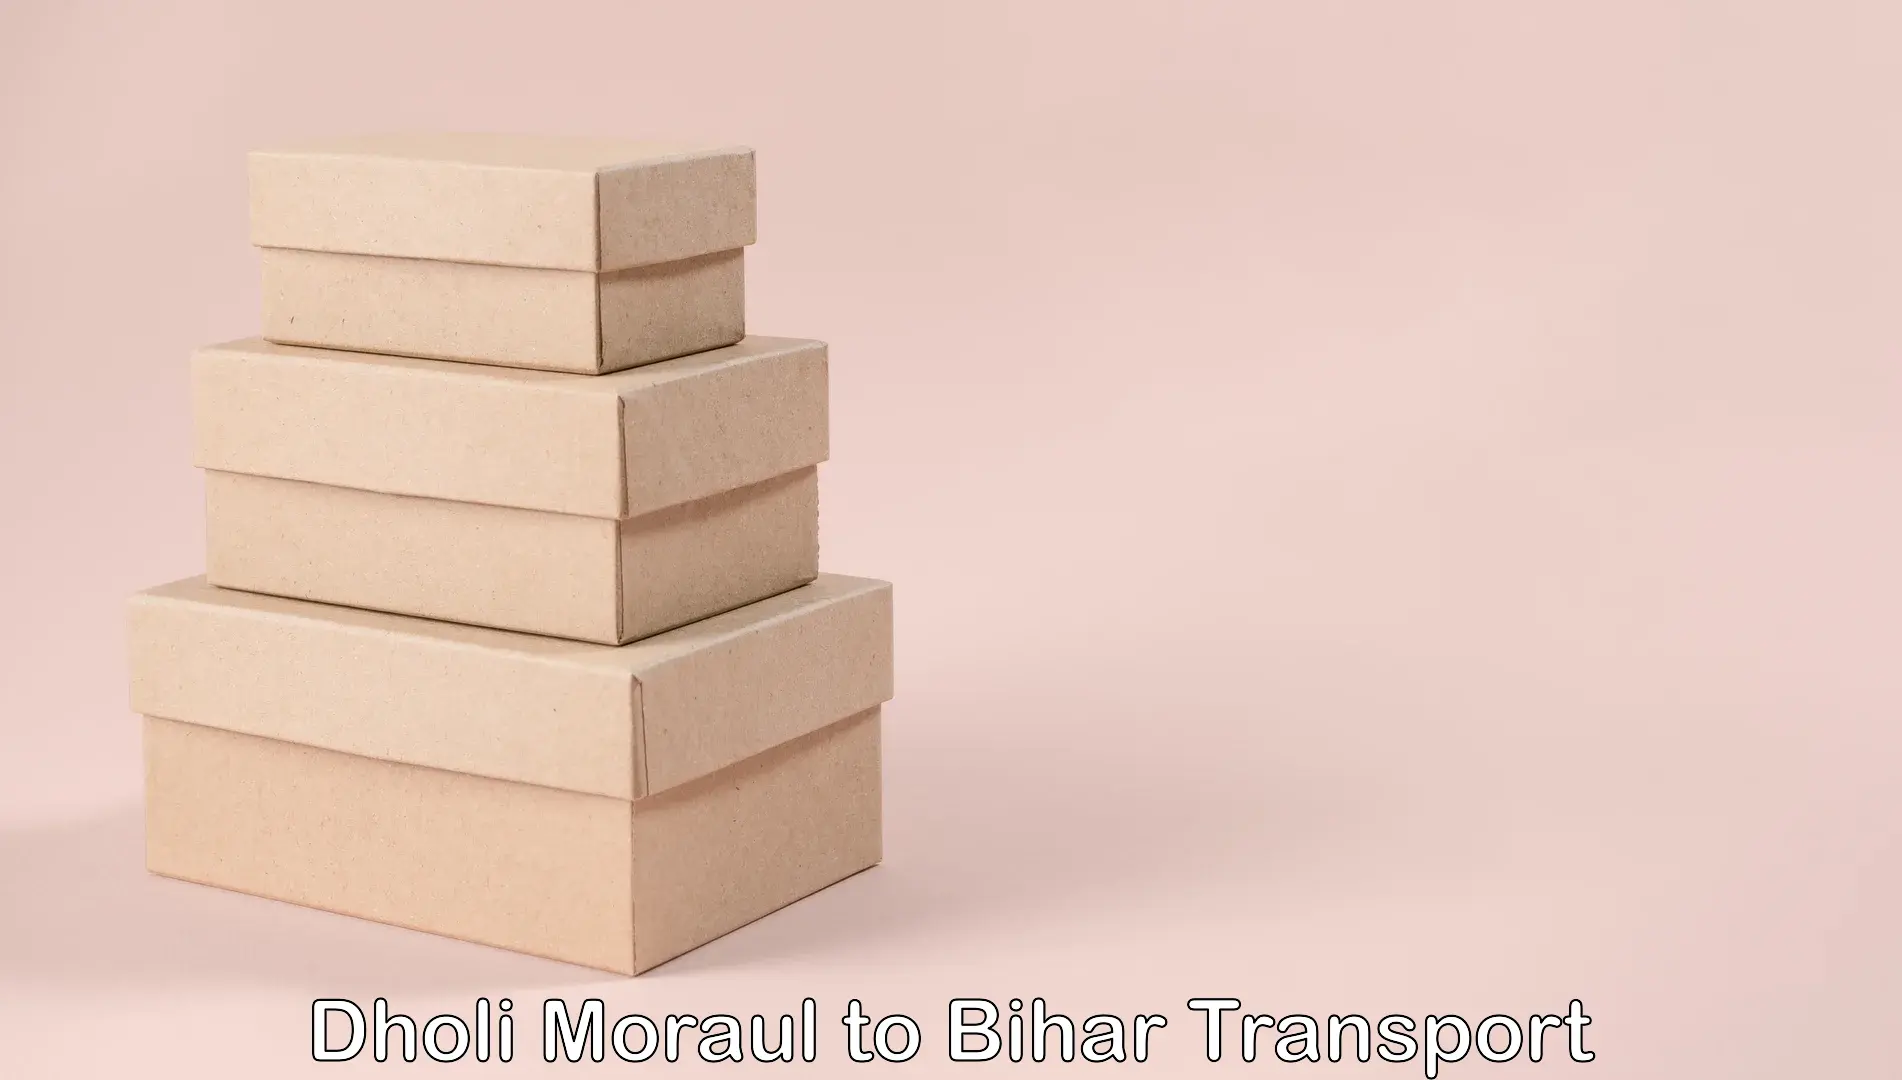 Truck transport companies in India Dholi Moraul to Nawada